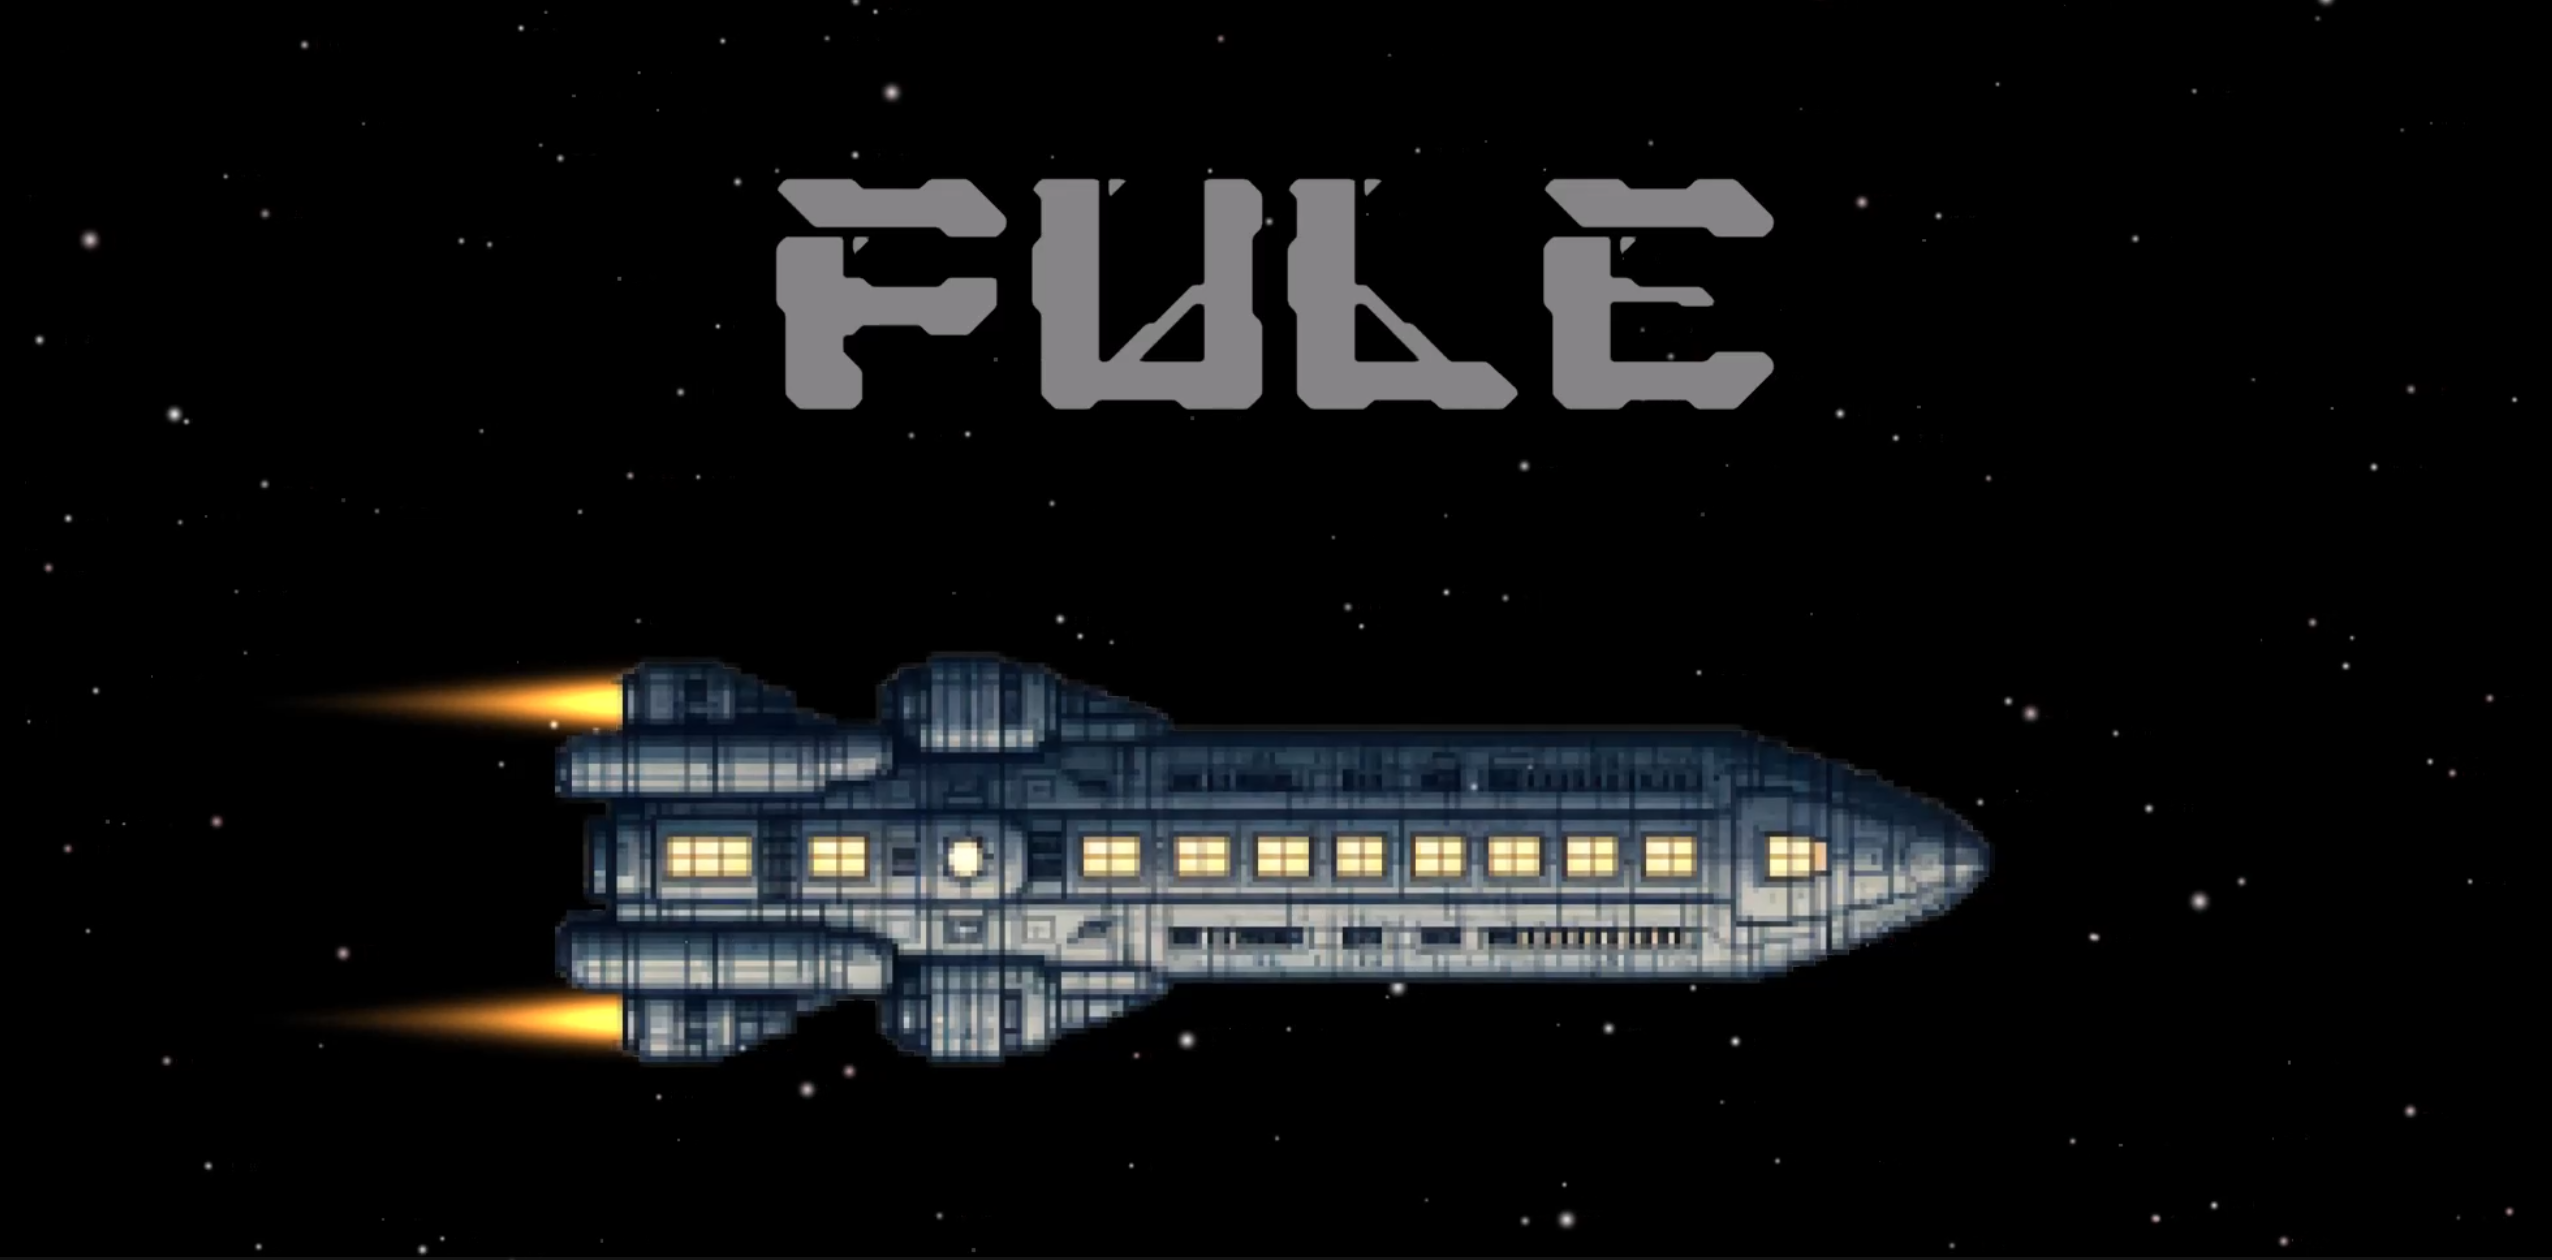 FULE: An Interstellar Odyssey